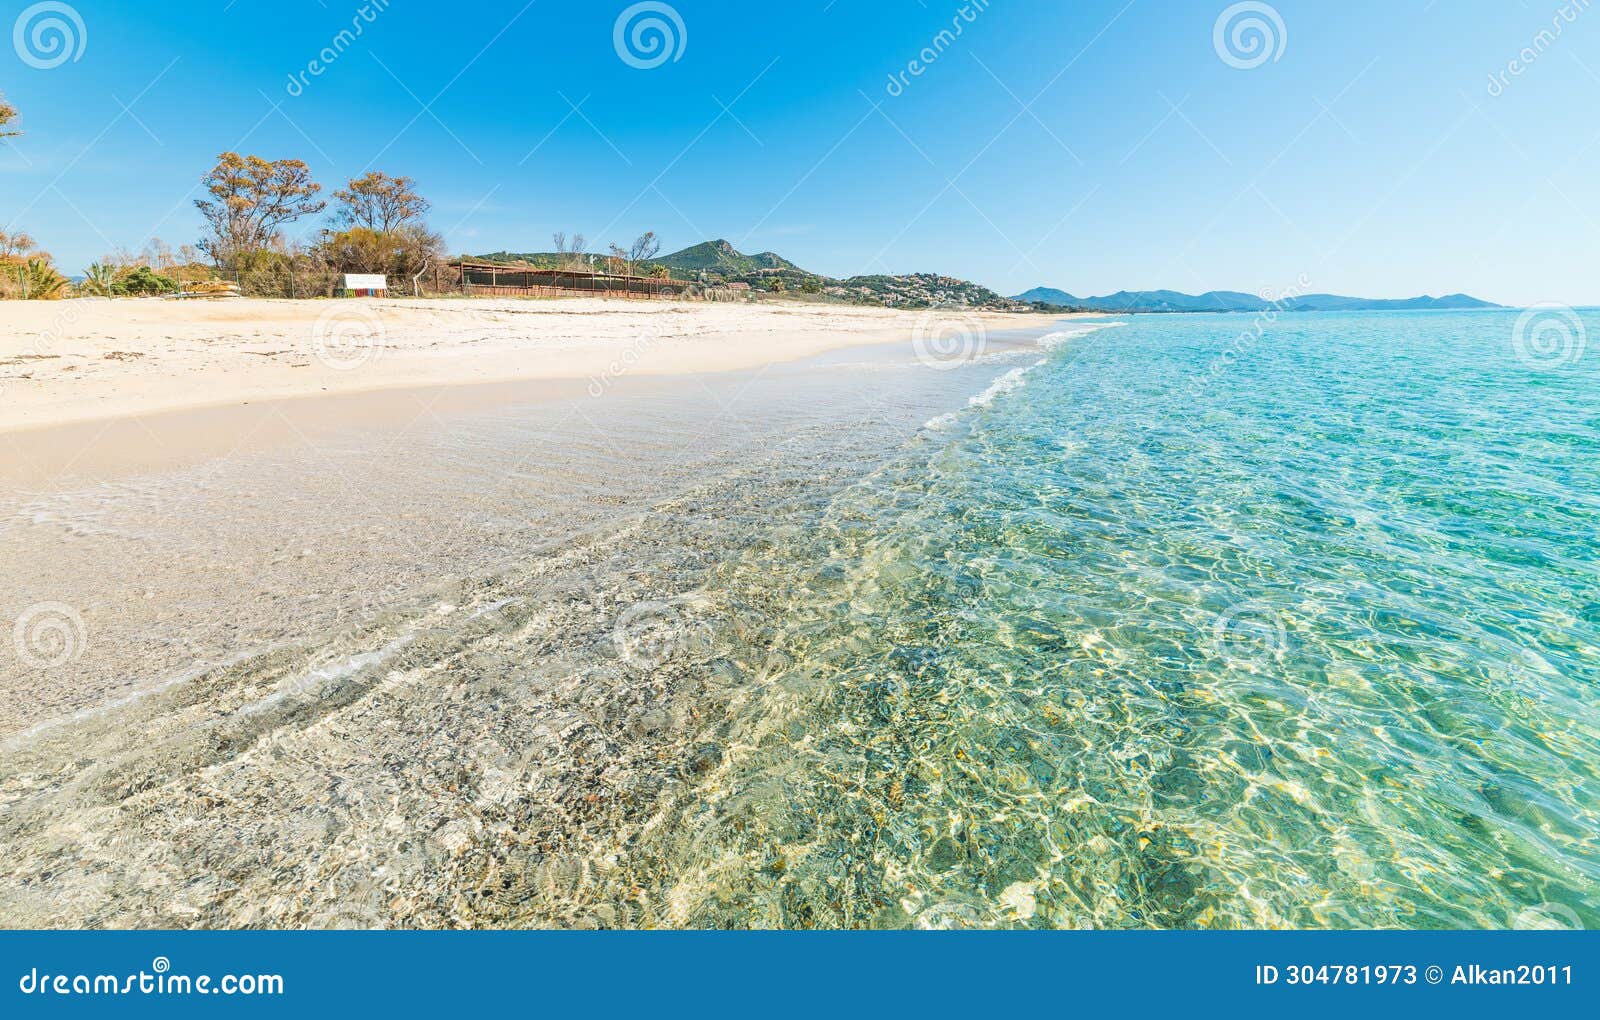 turquoise sea in piscina rei beach